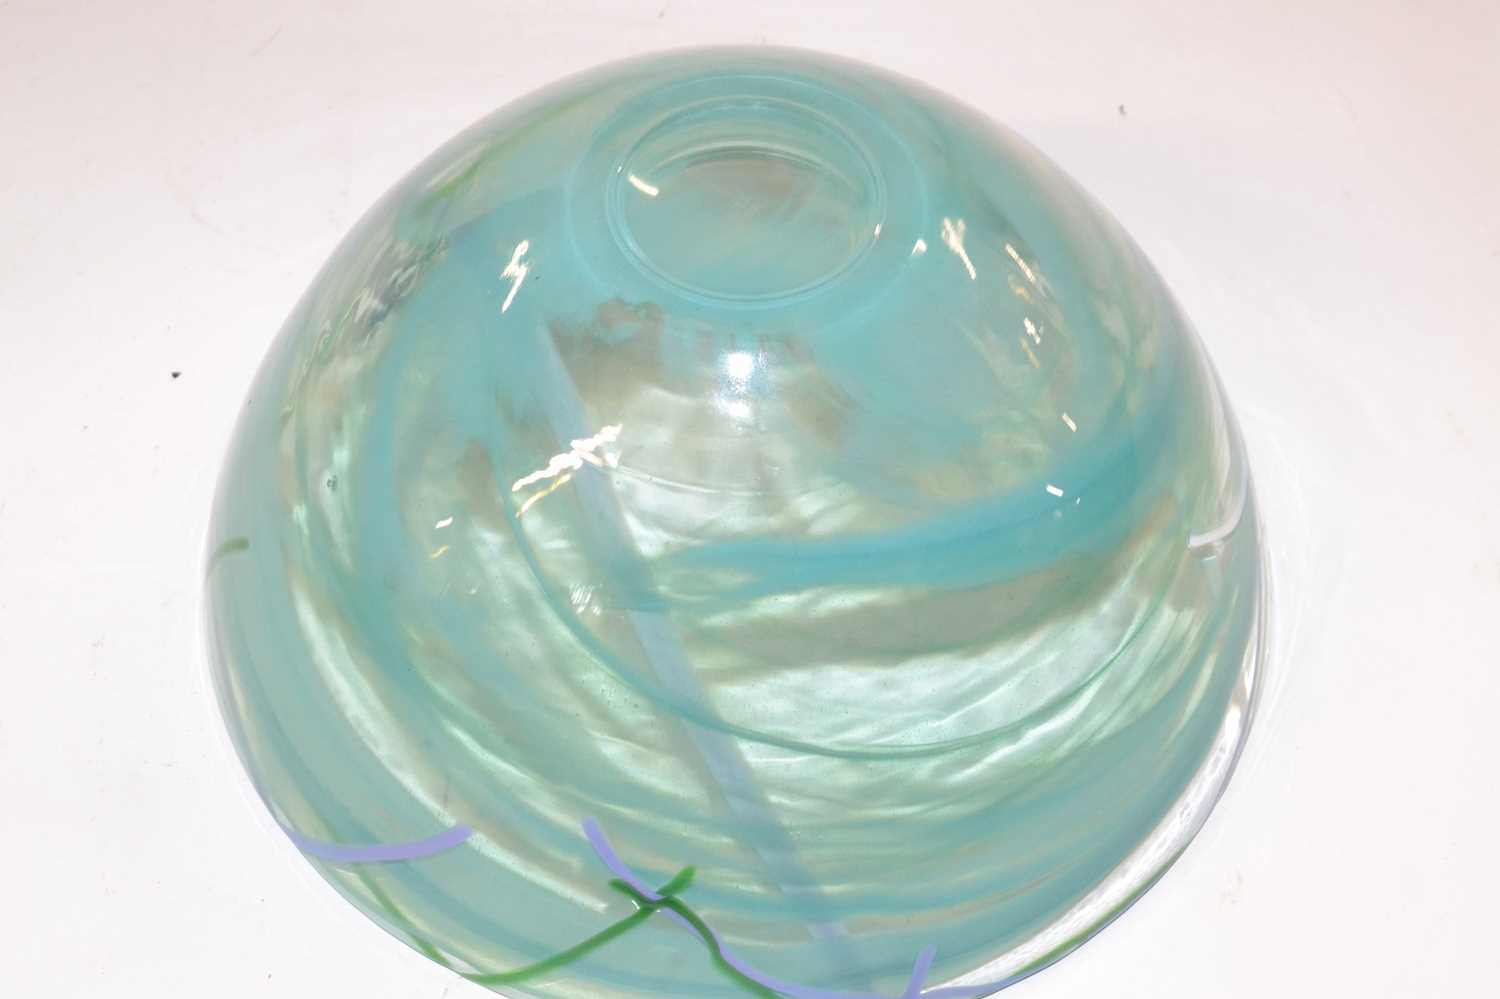 A Kosta Boda glass bowl with a green streak design, 22cm diameter - Image 2 of 2